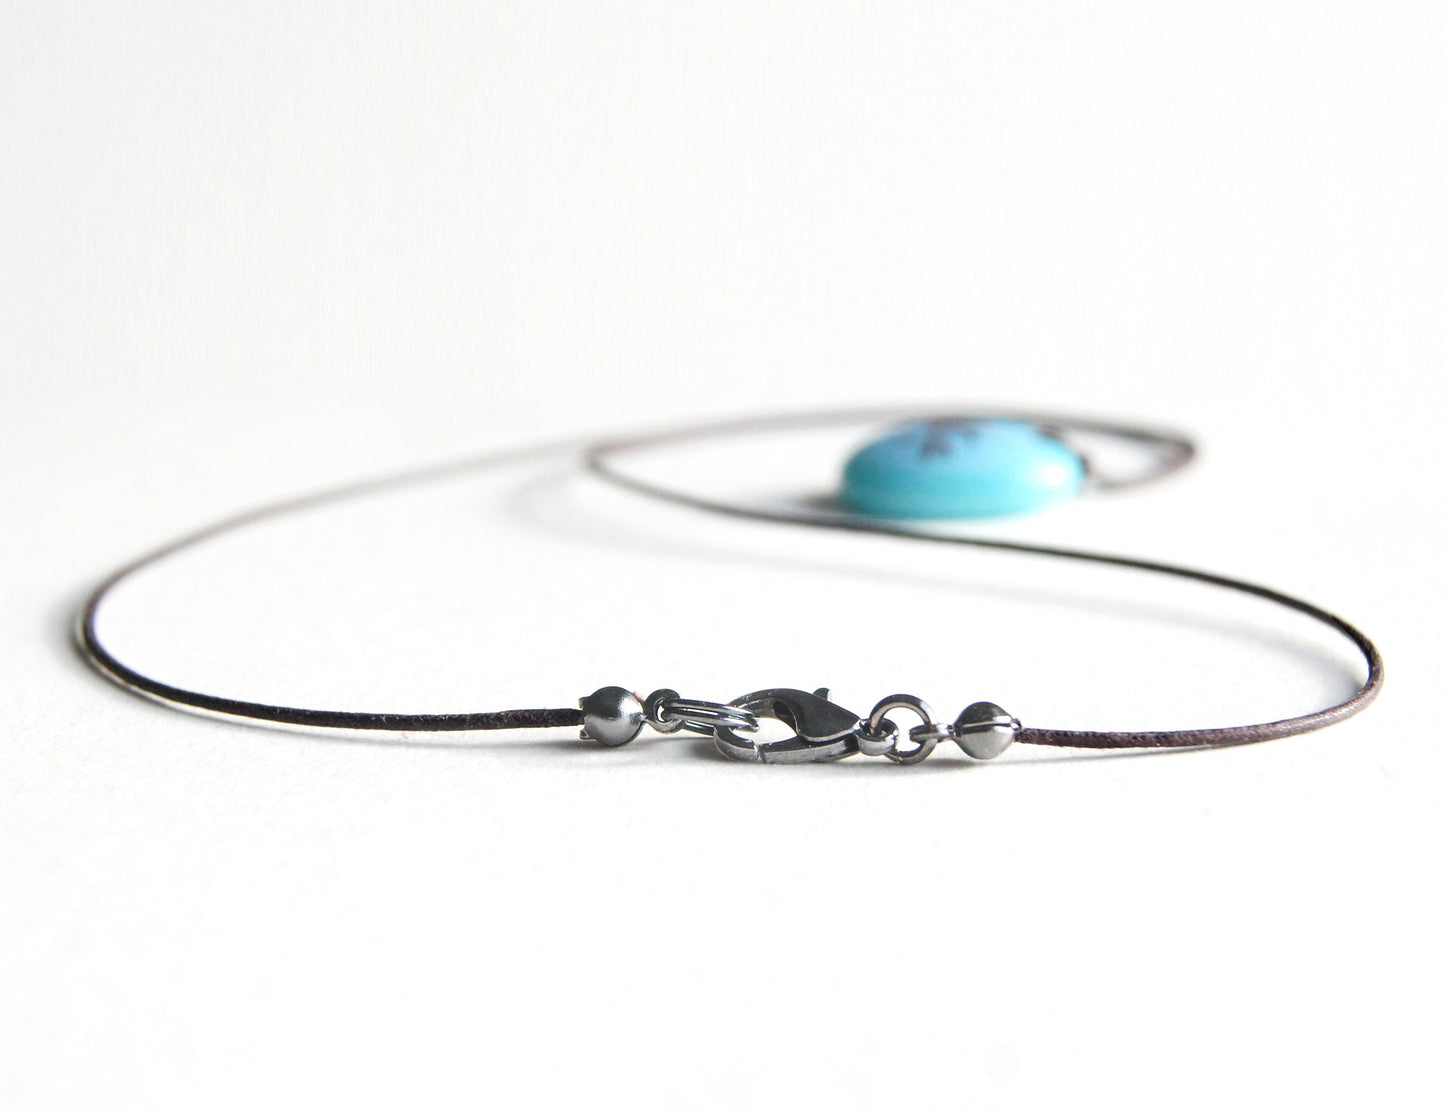 Glass Pendant Necklace #2